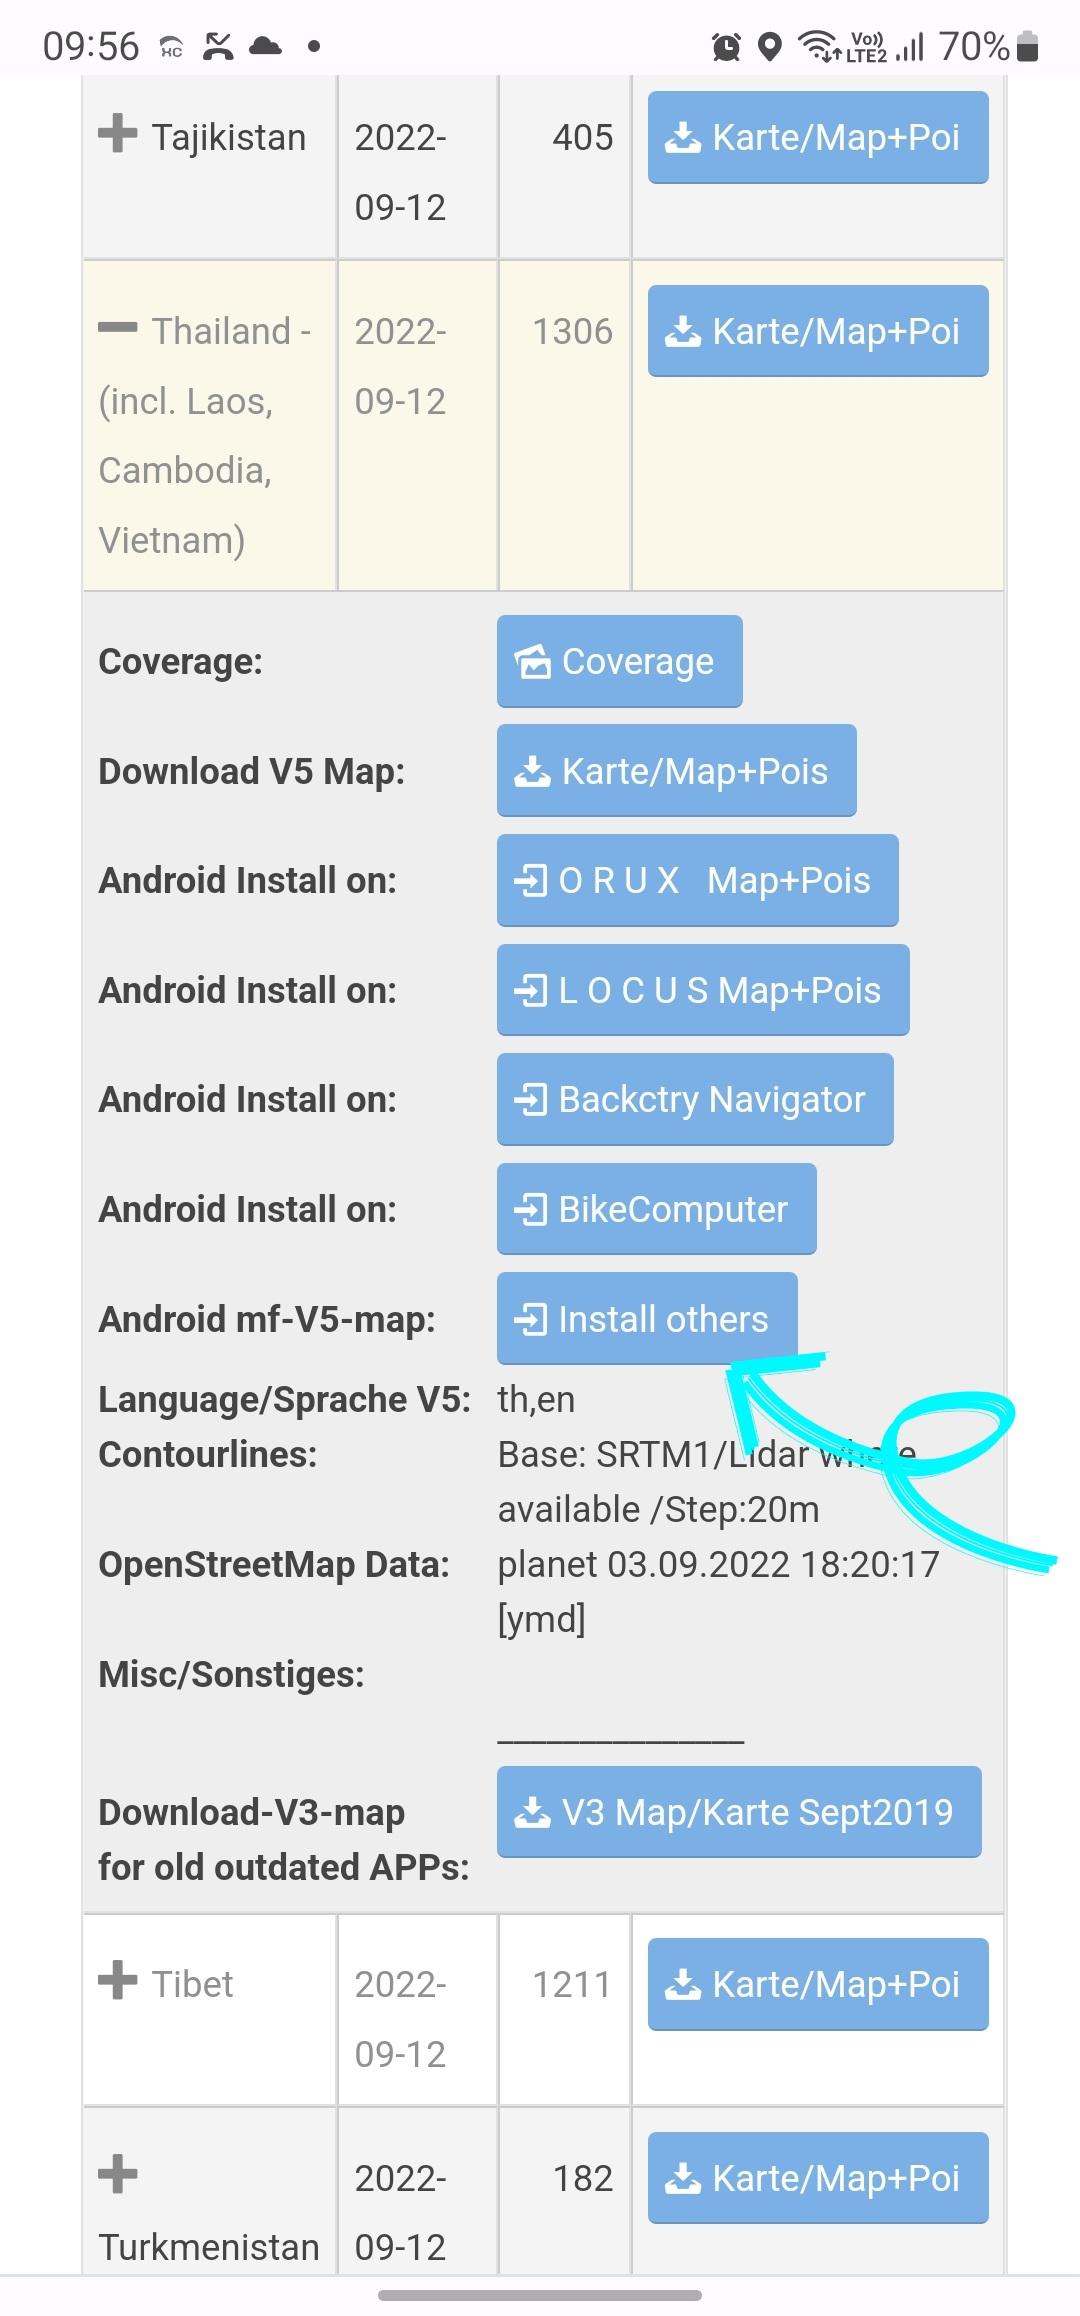 Bước 6: chọn Android mf-V5-map, chọn Install others 